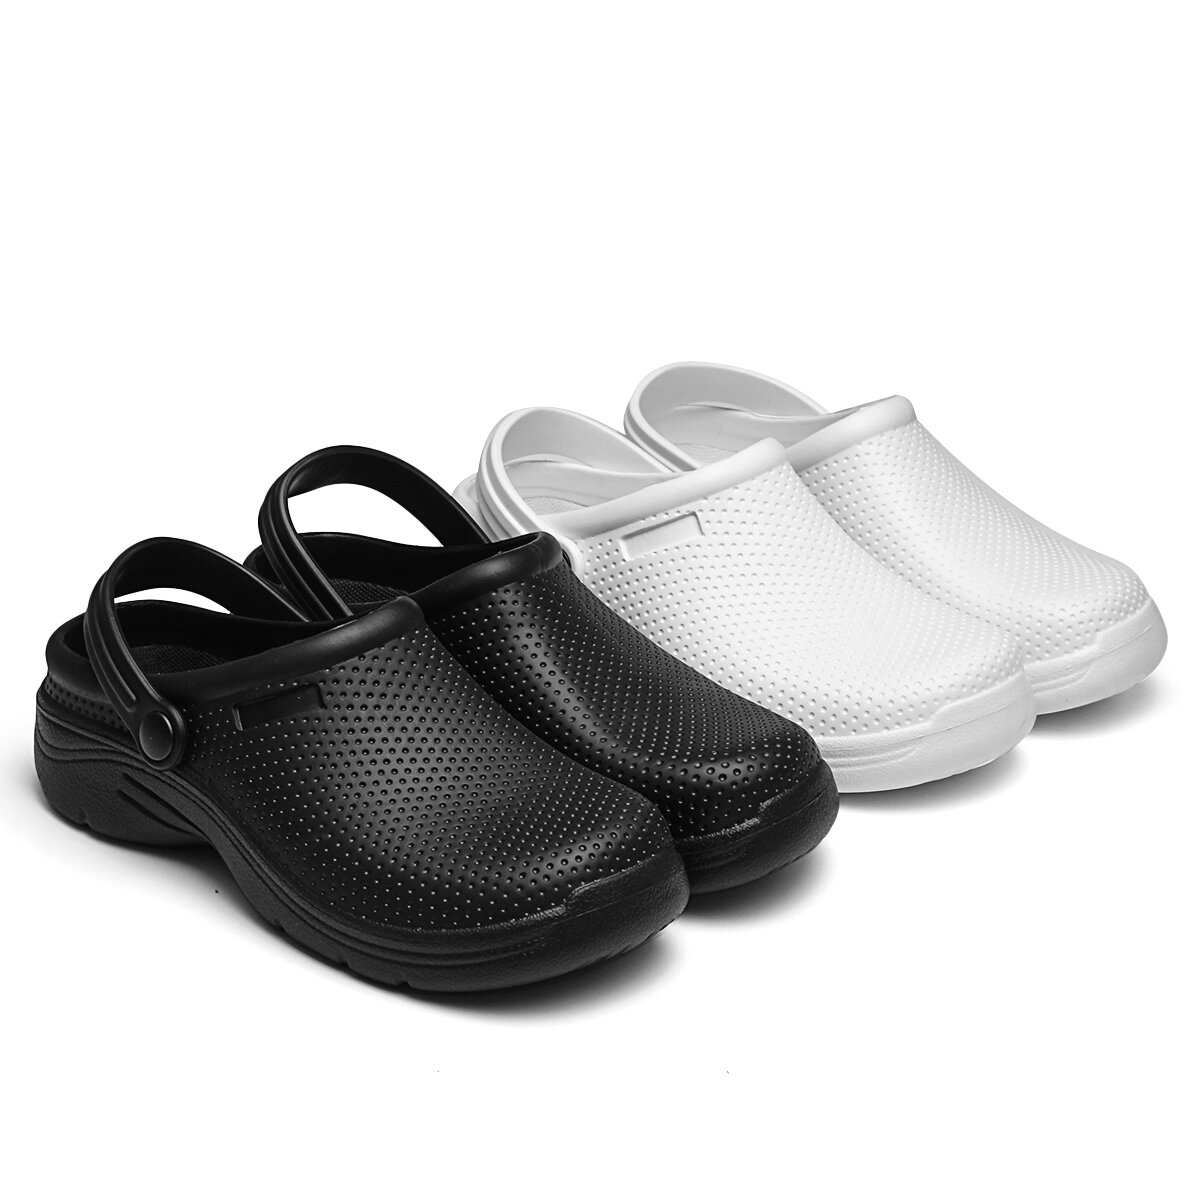 AtreGo EVA Summer Sandals Safety Shoes Αδιάβροχα αντιολισθητικά εξωτερικά παπούτσια εσωτερικής παραλίας για γυναίκες και άνδρες